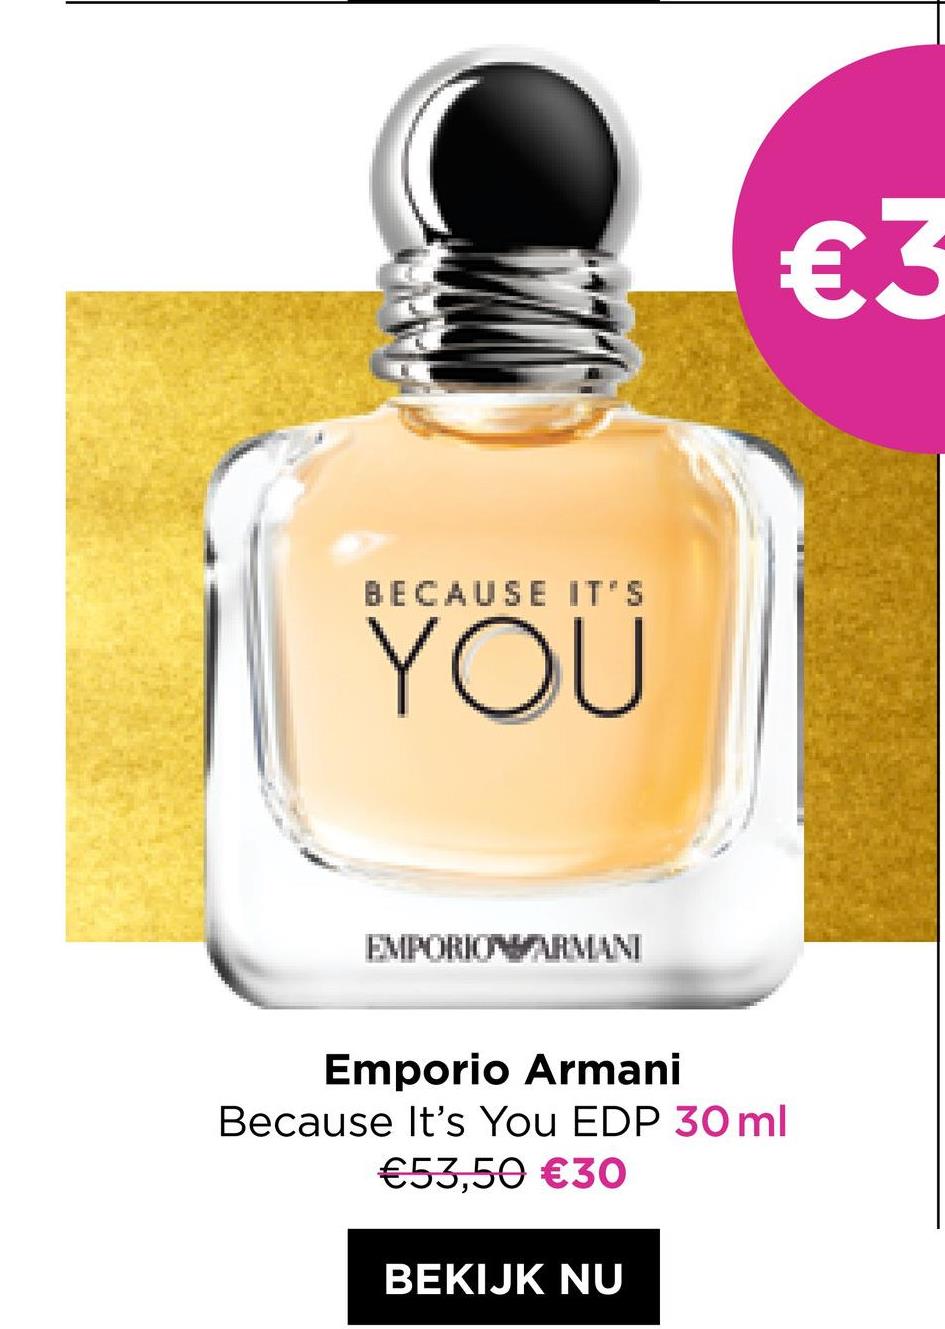 BECAUSE IT'S
YOU
EMPORIO ARMANI
€3
Emporio Armani
Because It's You EDP 30 ml
€53,50 €30
BEKIJK NU